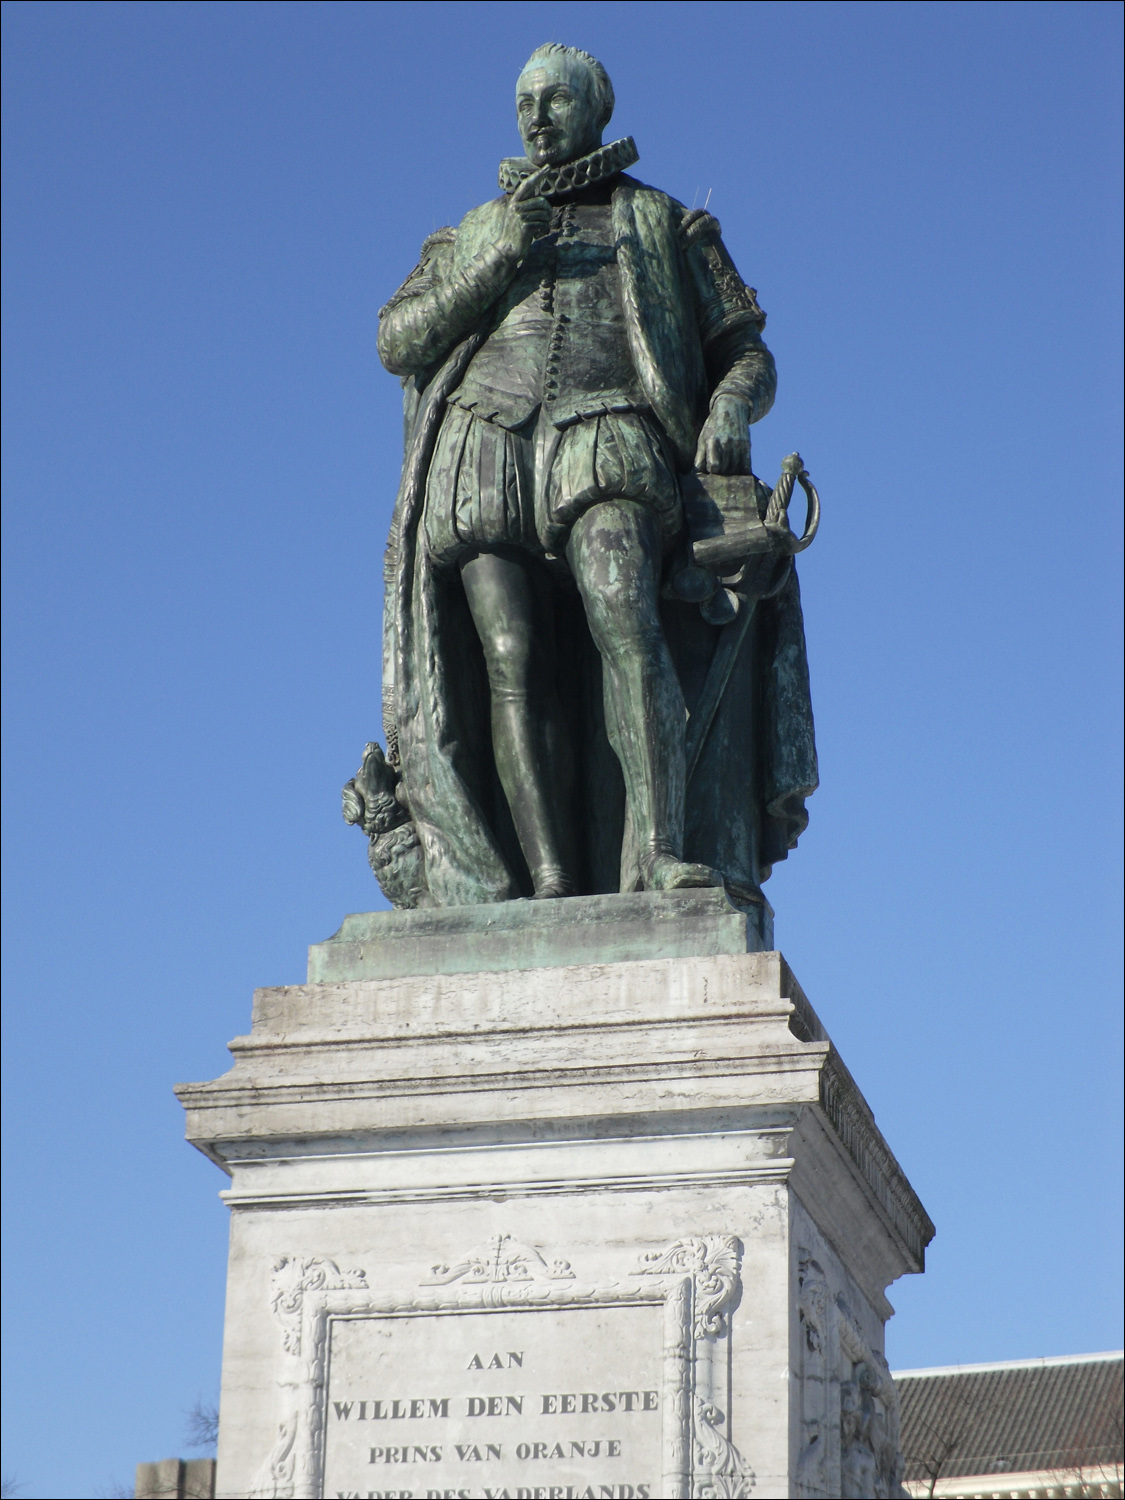 Hague-statue of William the Silent, Prince of Orange